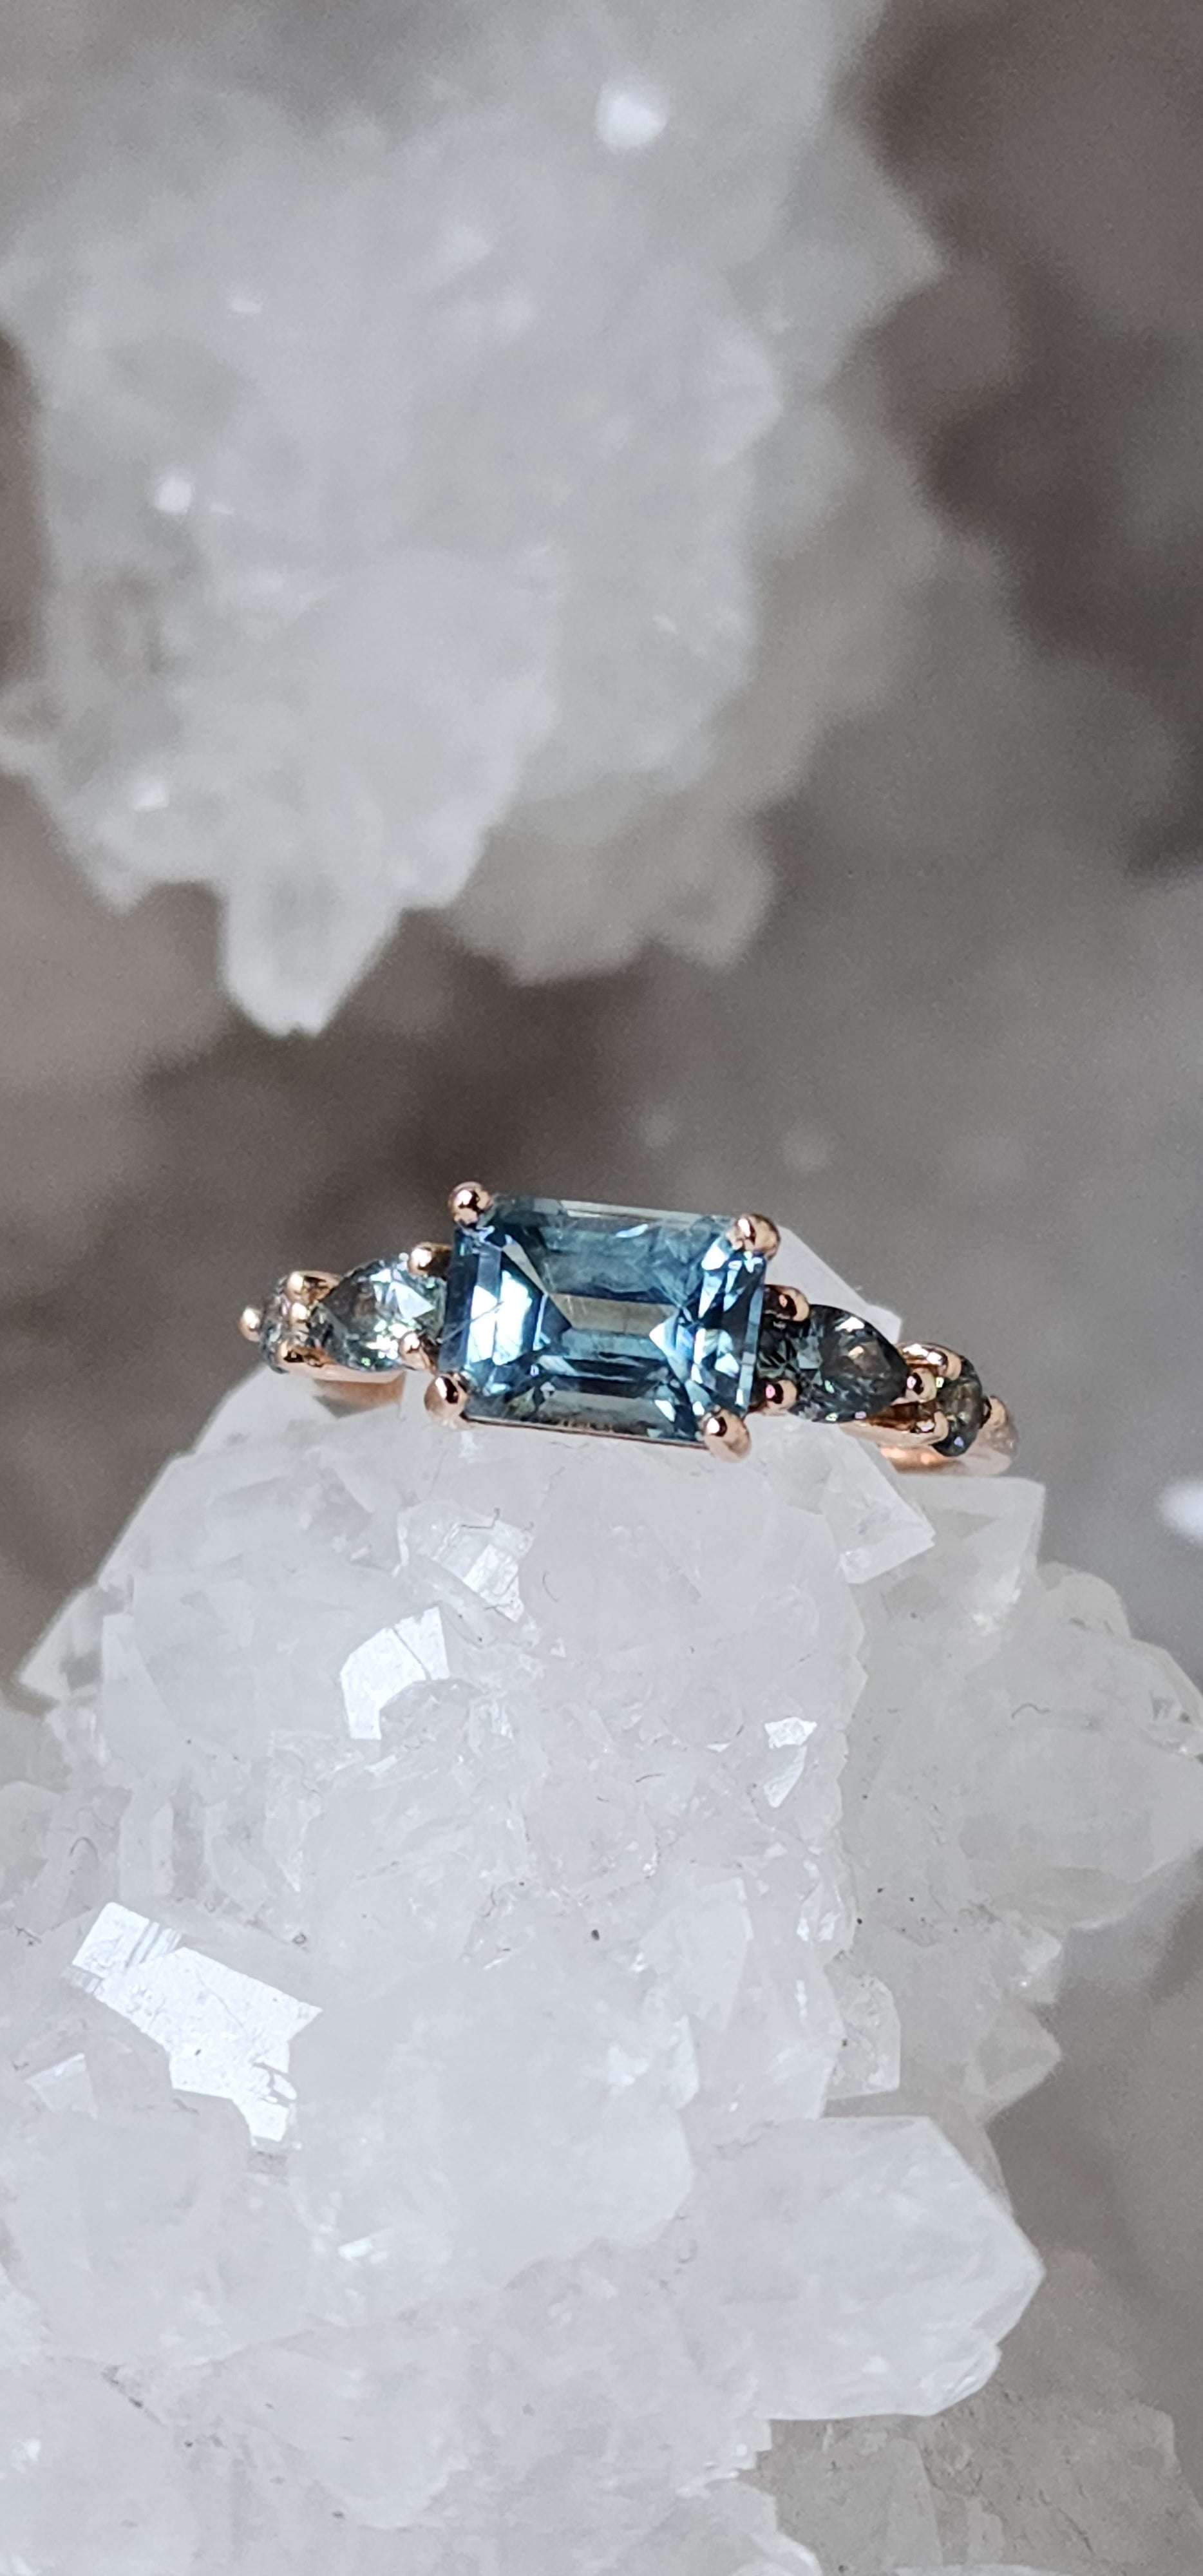 Ring - 1.87 CT Montana Sapphire Light Seafoam Blue Emerald Cut Ring in 14K Rose Gold